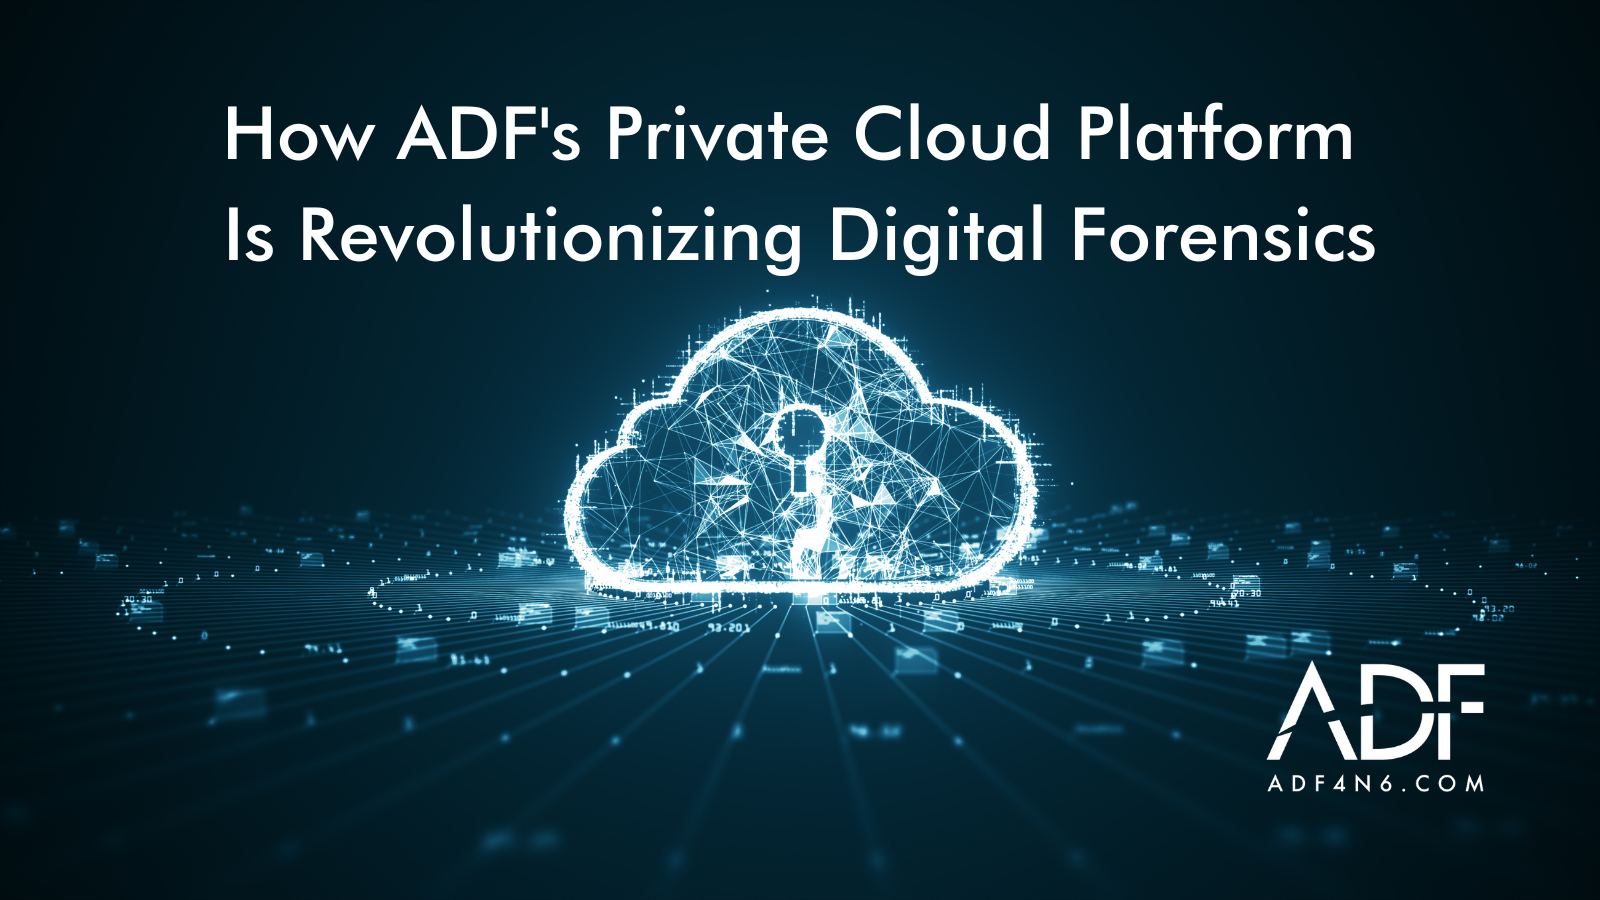 How The ADF Cloud Platform Is Revolutionizing Digital Forensics